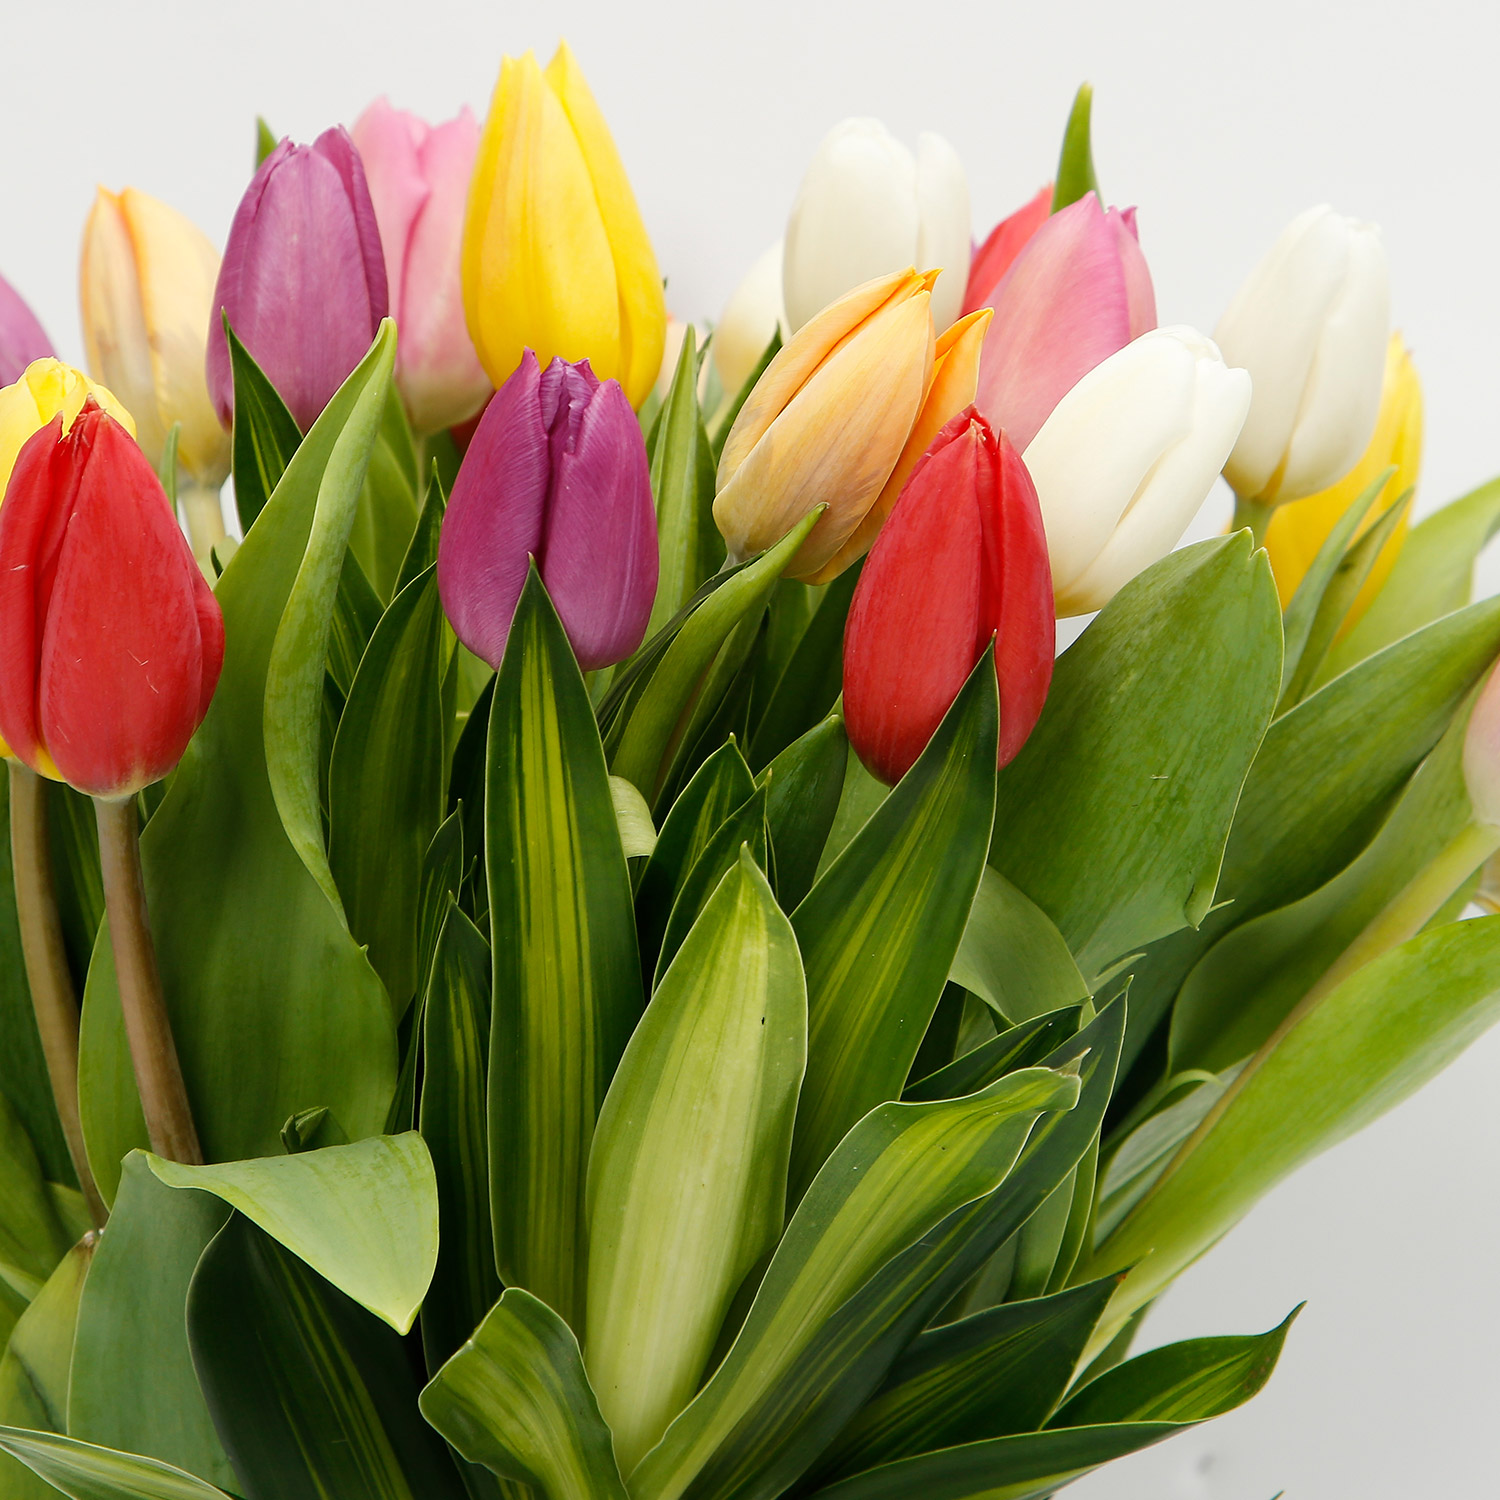 25 Vibrant Tulips Bunch - Flowers